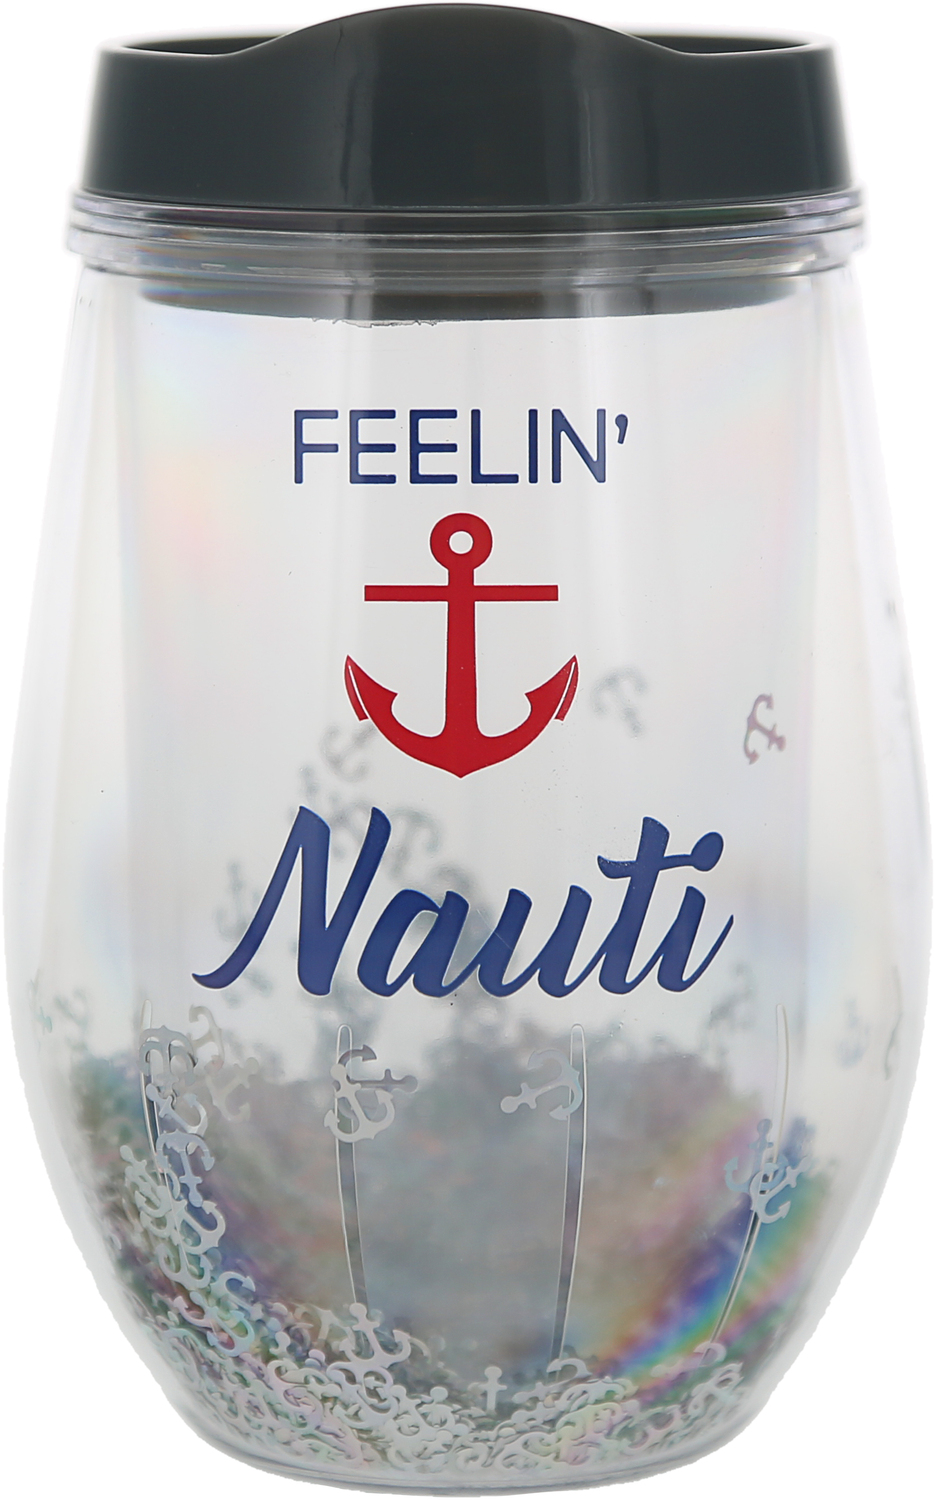 Feelin' Nauti by We People - Feelin' Nauti - 12 oz Acrylic Stemless Wine Glass with Lid